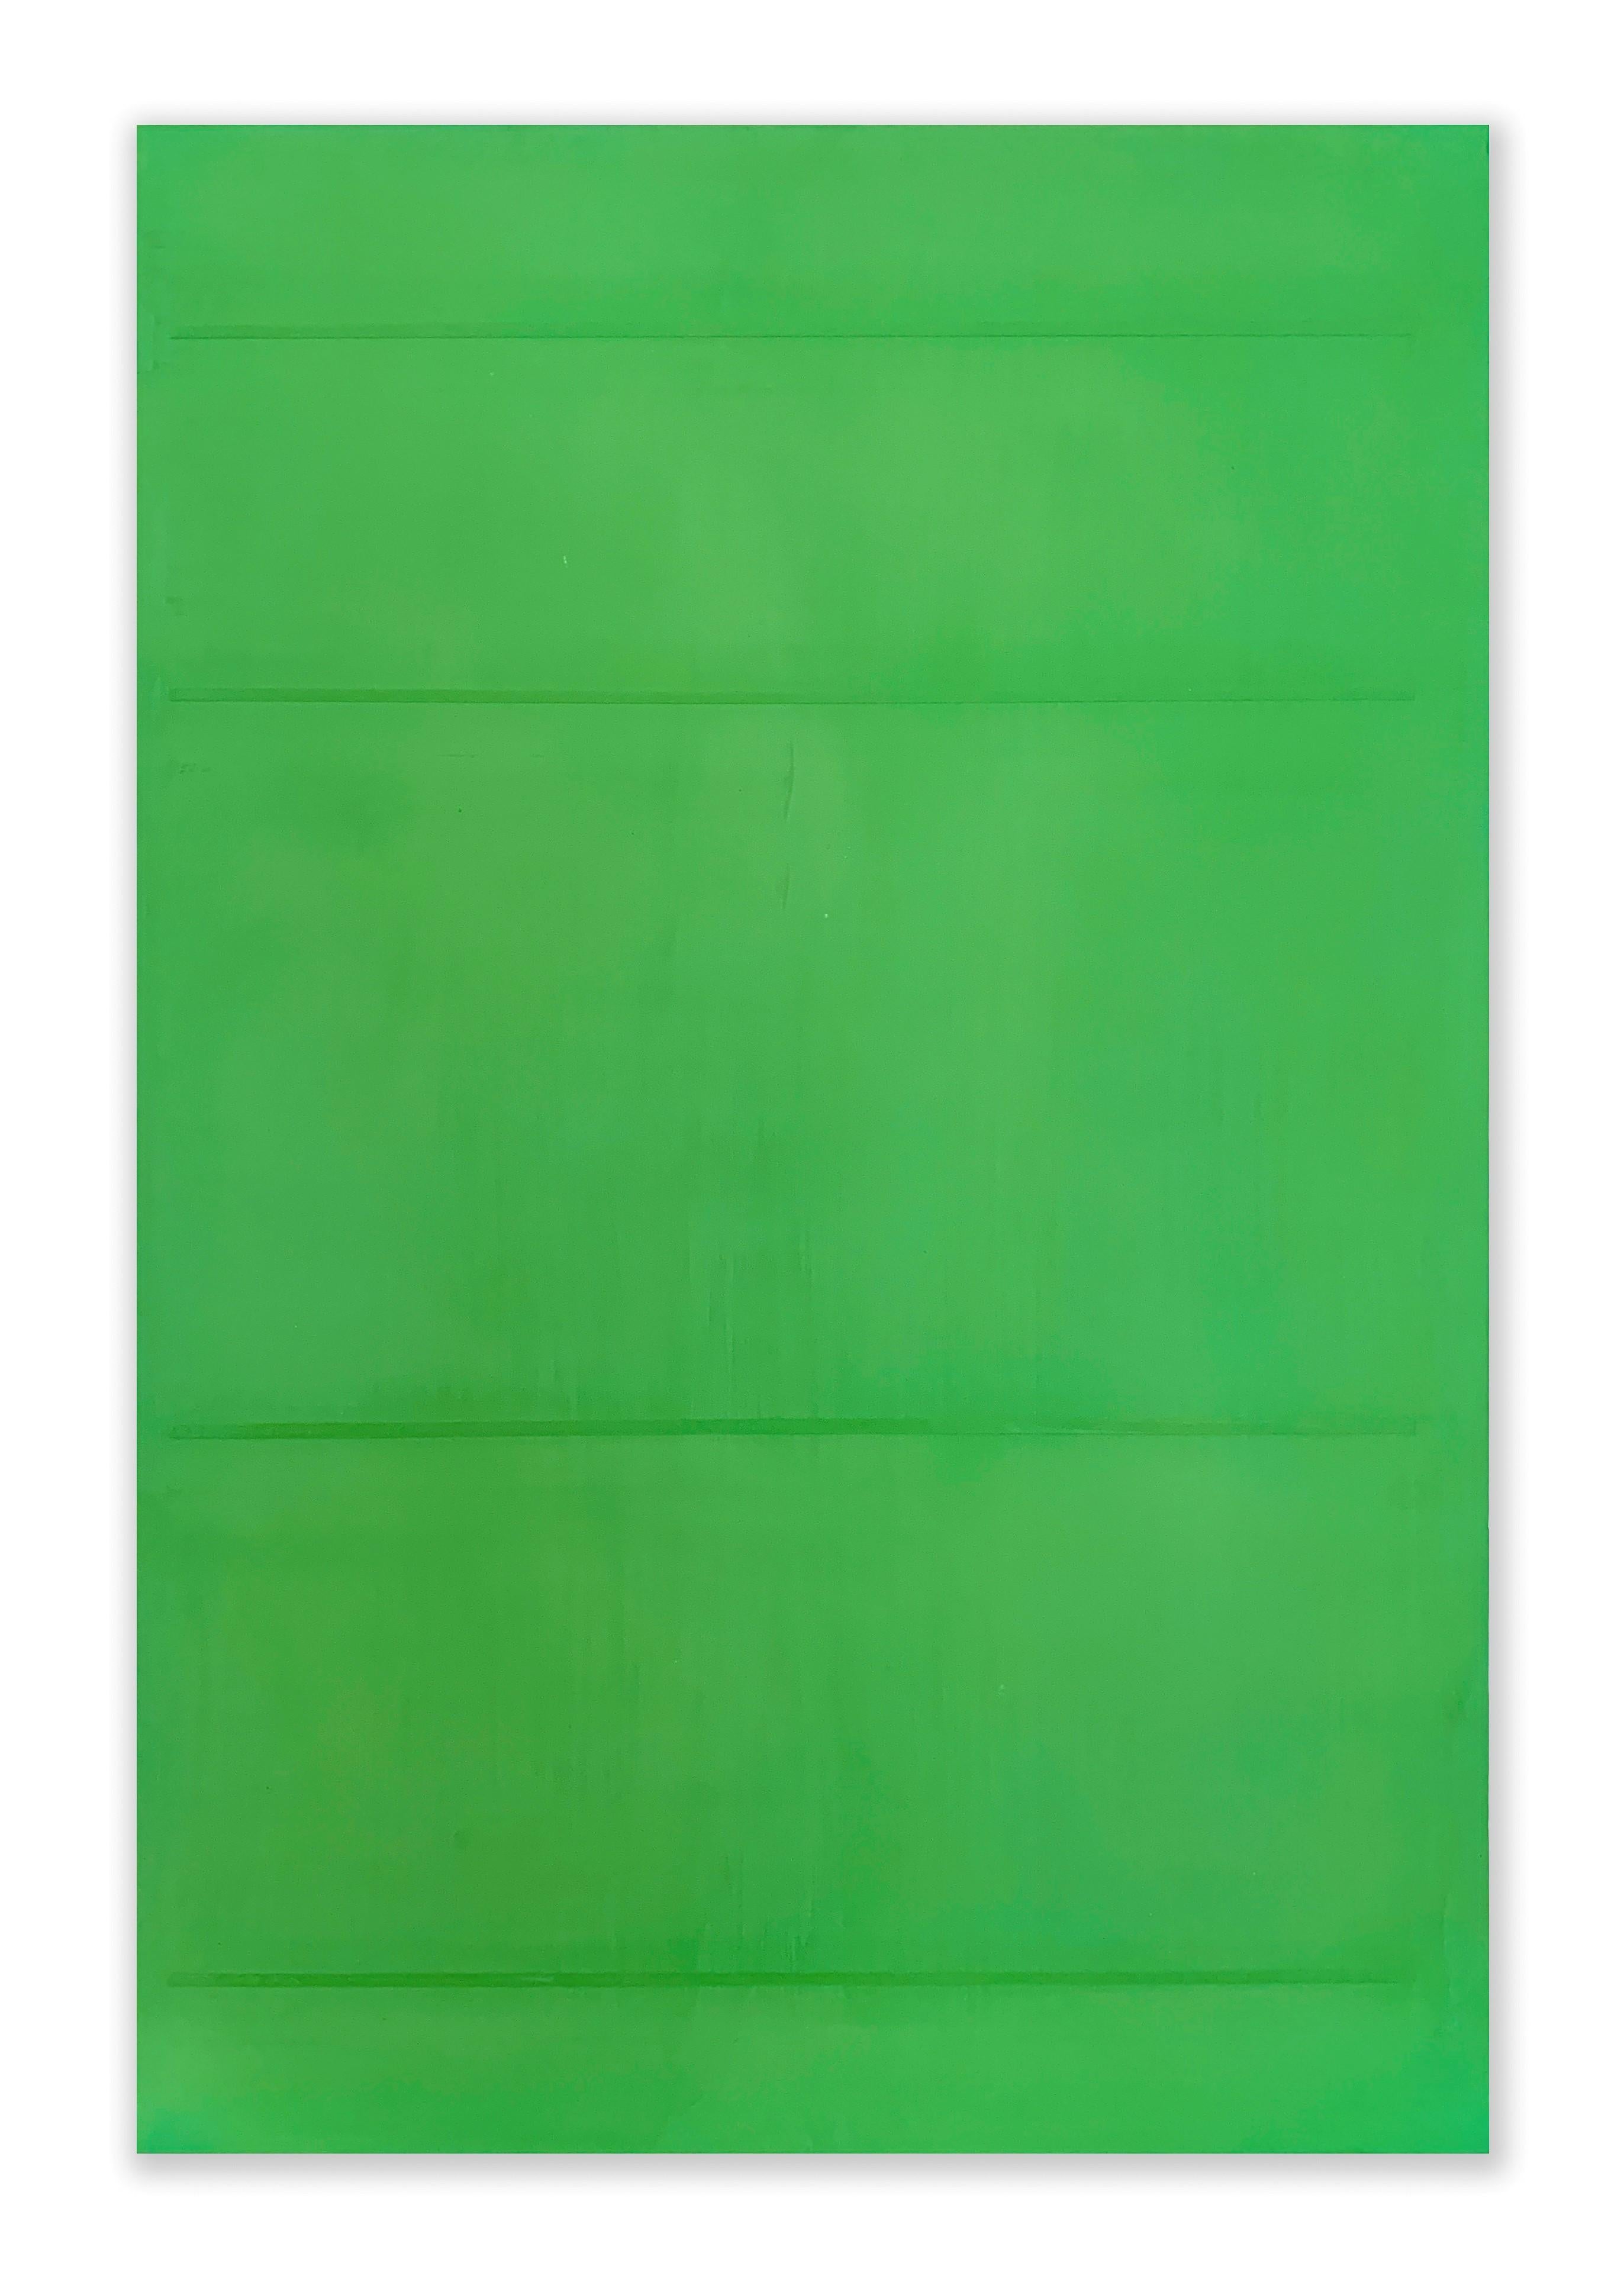 Lined Space Green 3 - Mixed Media Art by Jeff Kellar